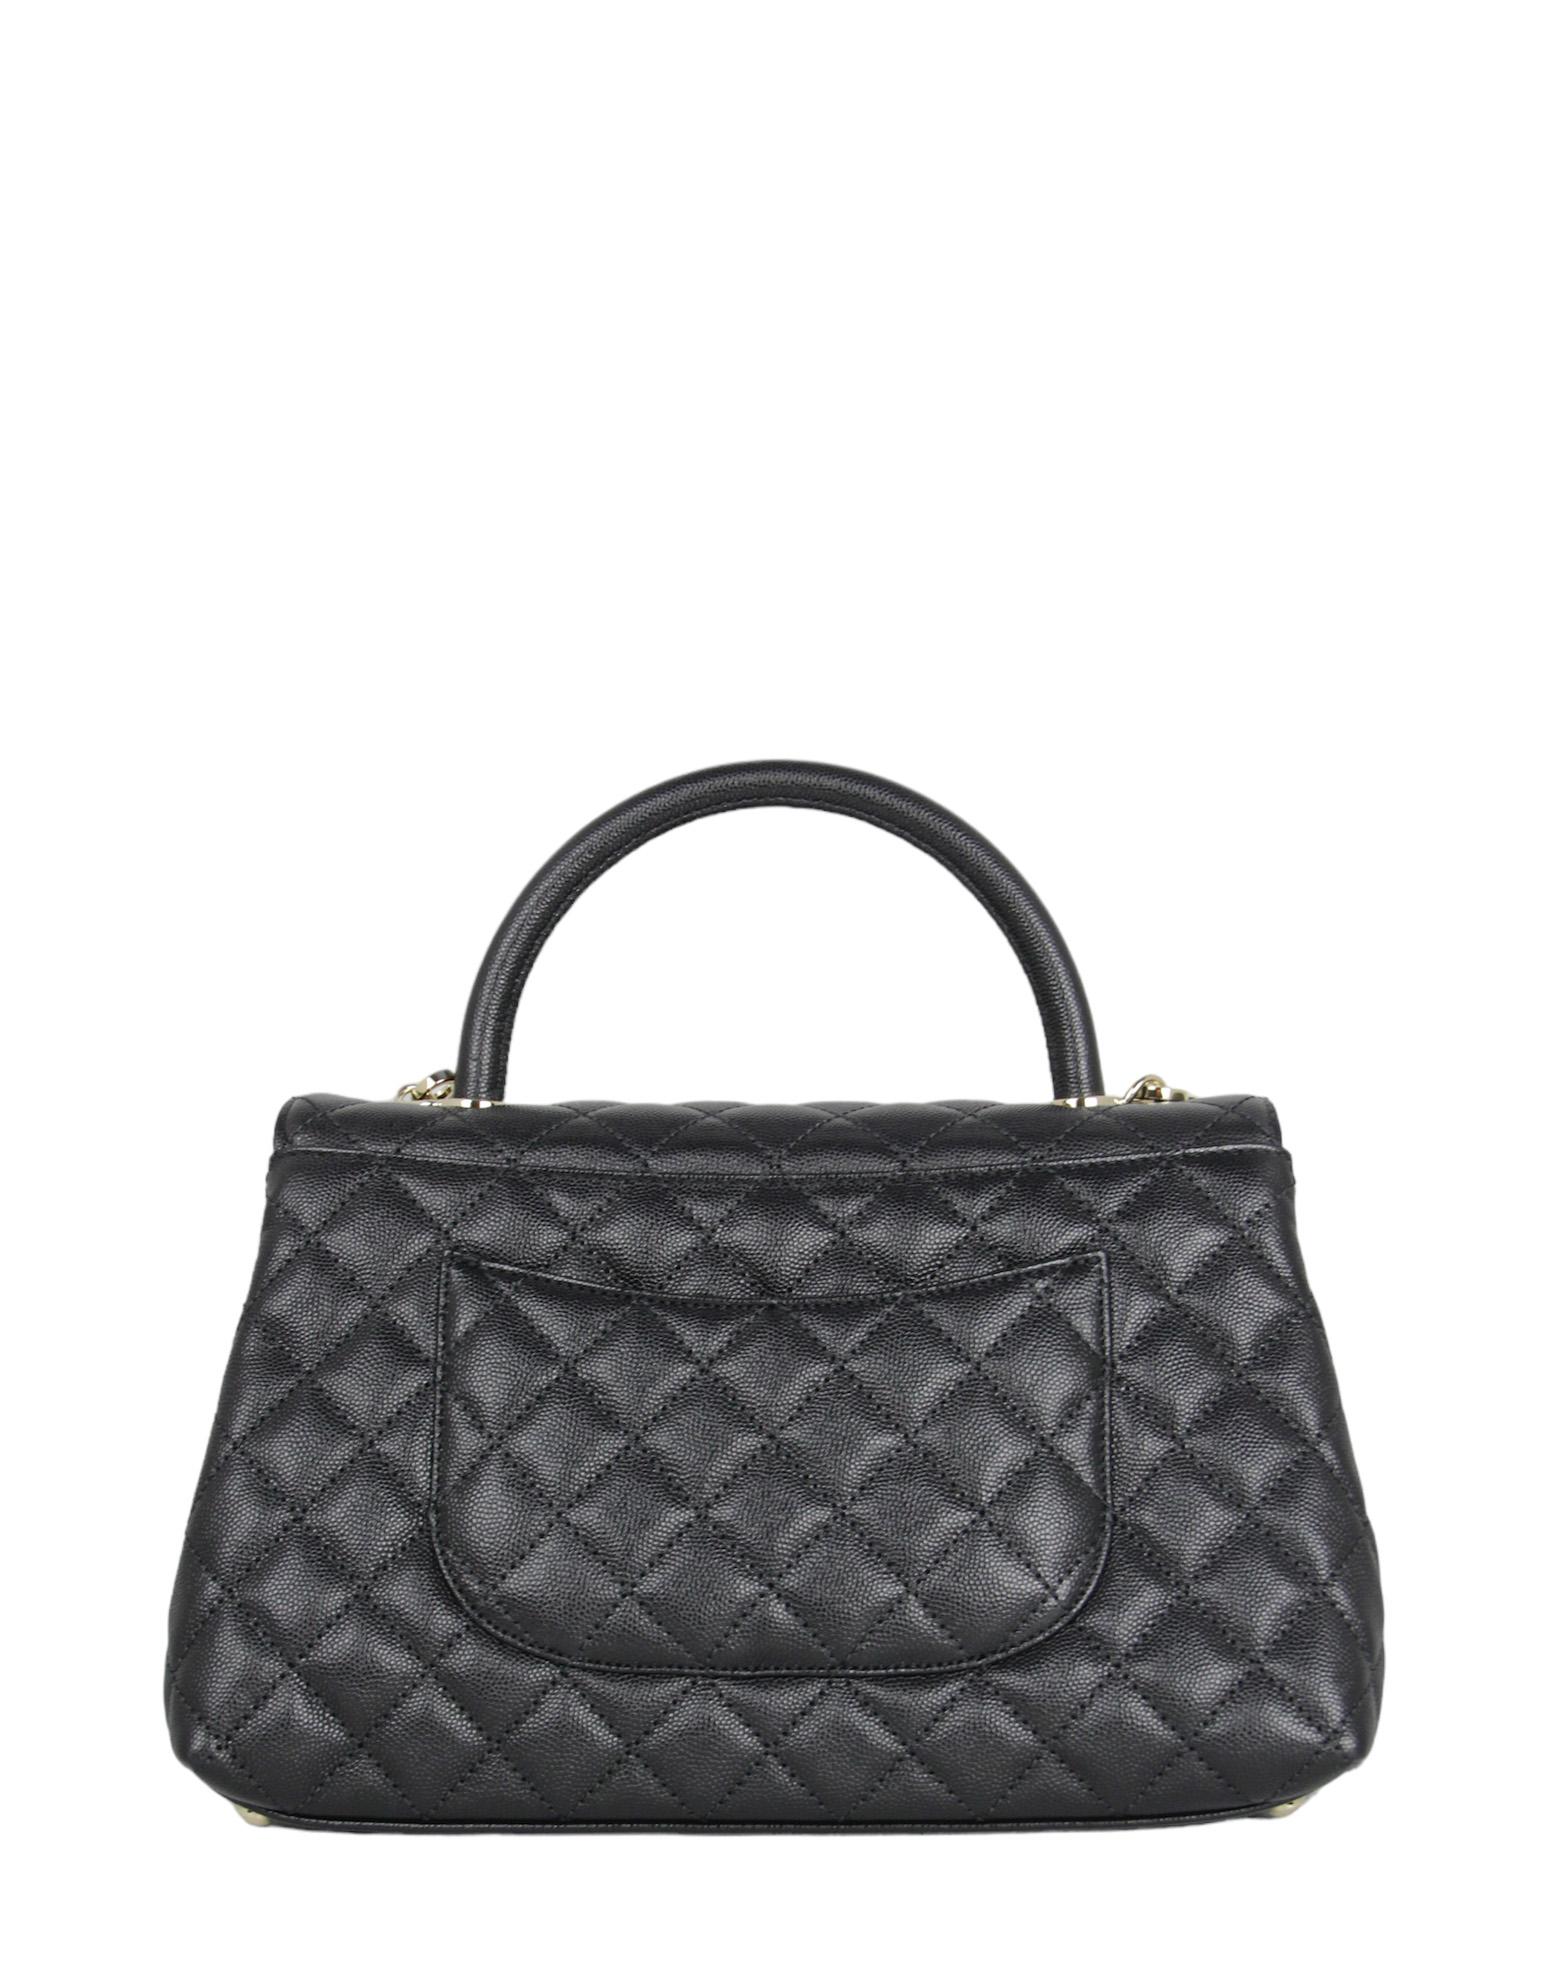 Chanel Noir Cuir Caviar Quilted Small Coco Handle Bag Flap Bag Excellent état - En vente à New York, NY